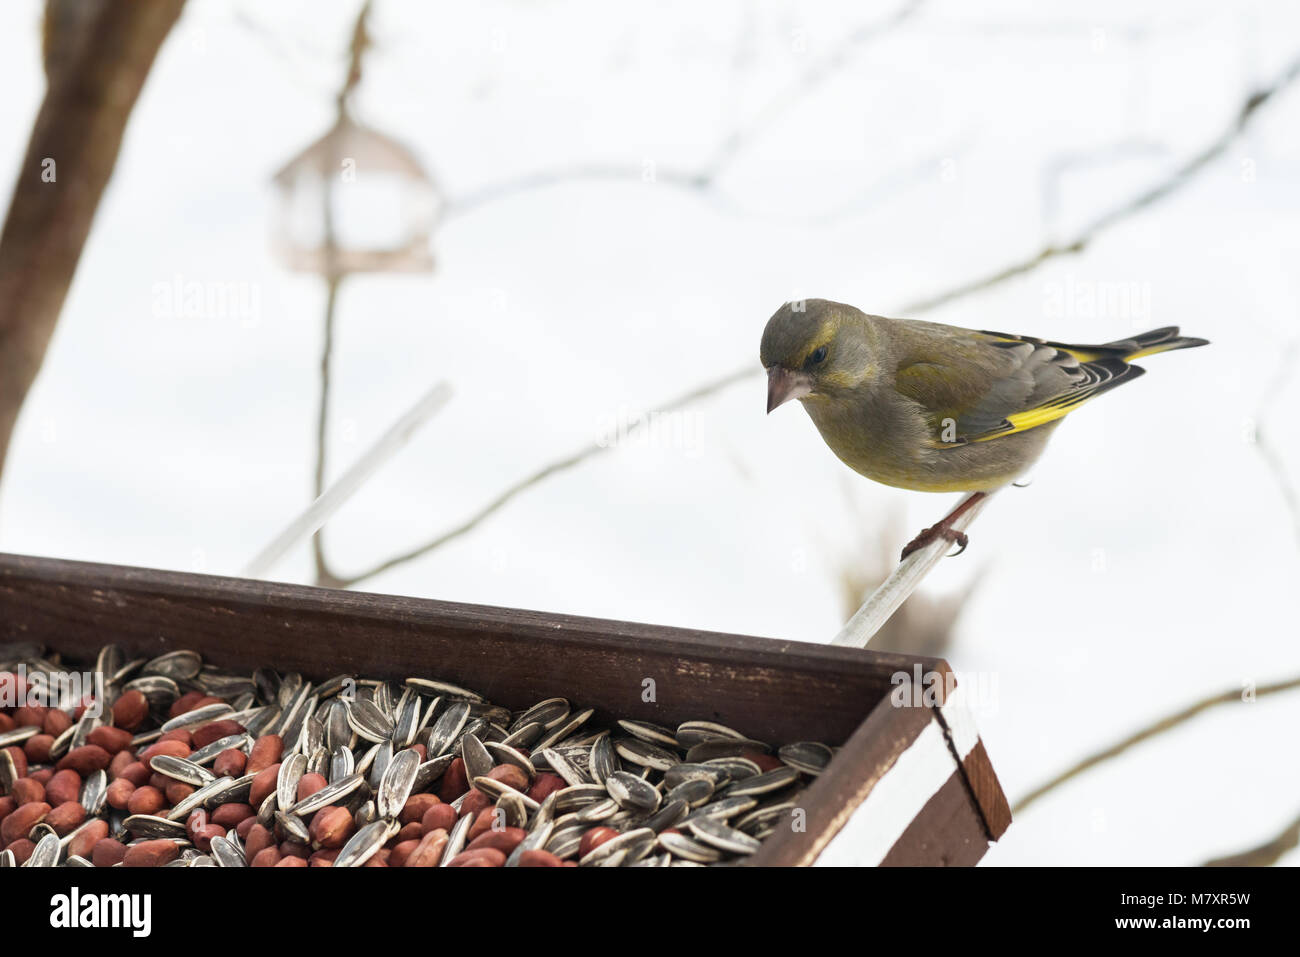 European greenfinch on a feeder. Feeding wild birds in winter. Stock Photo